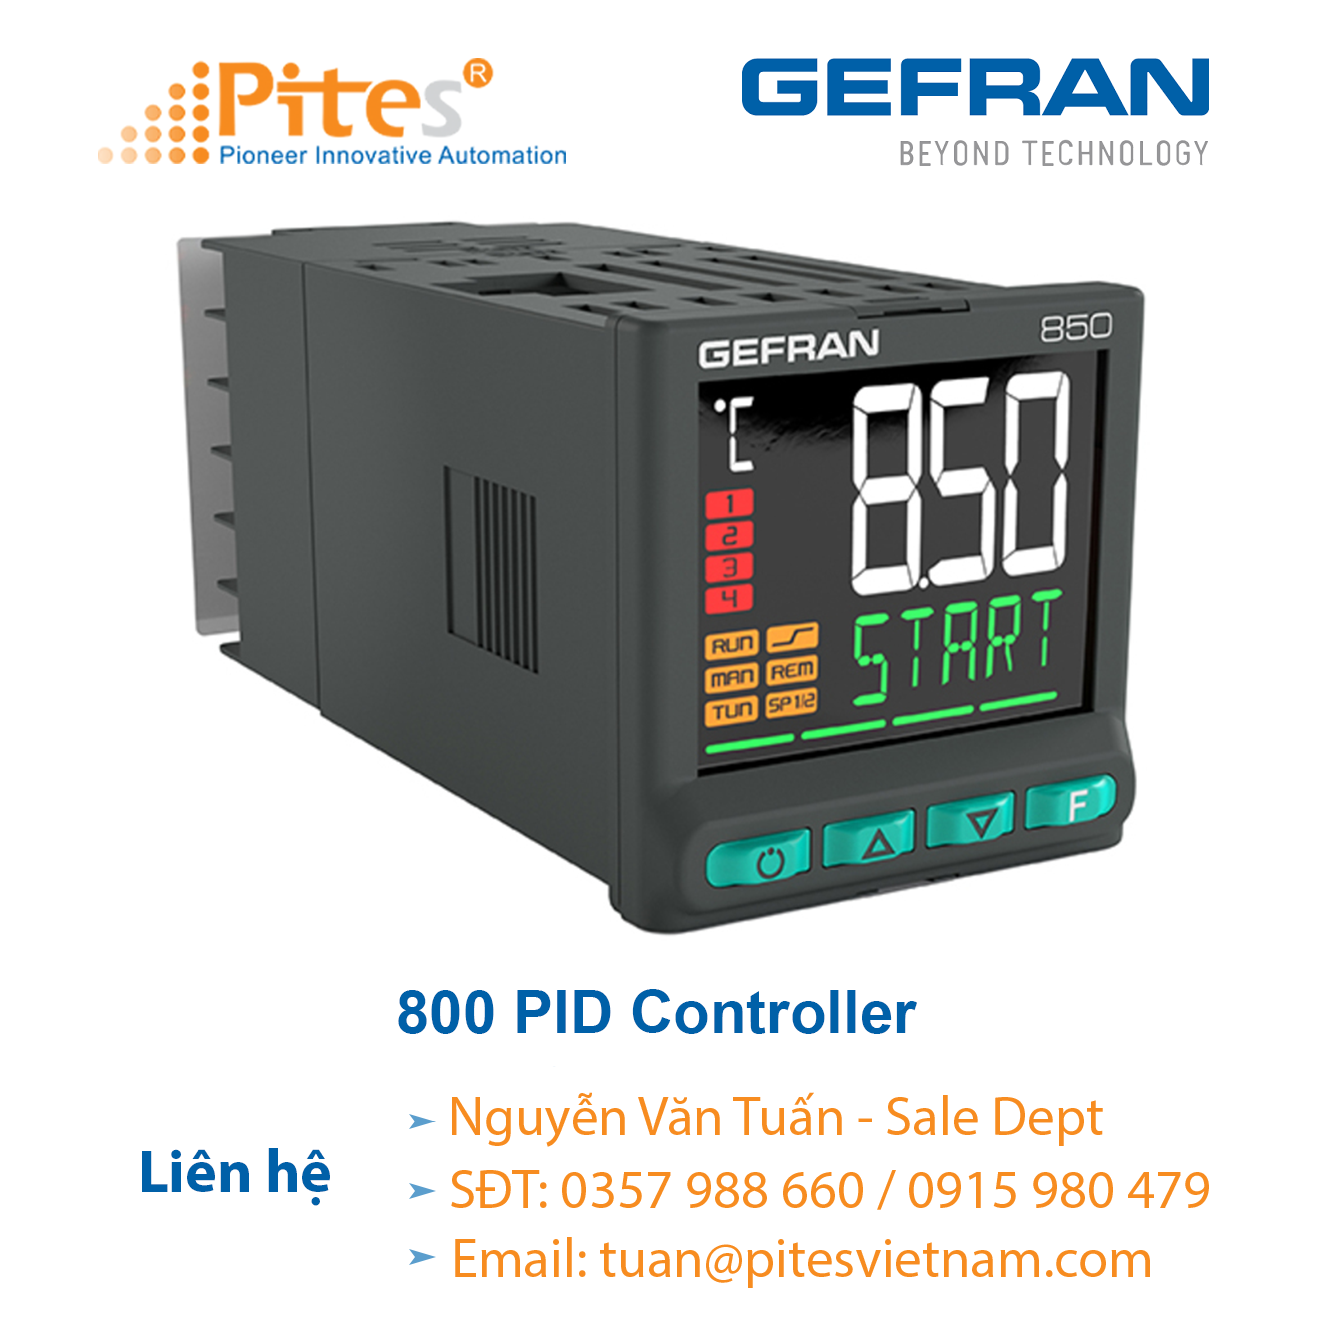 850-pid-controller-gefran-viet-nam.png